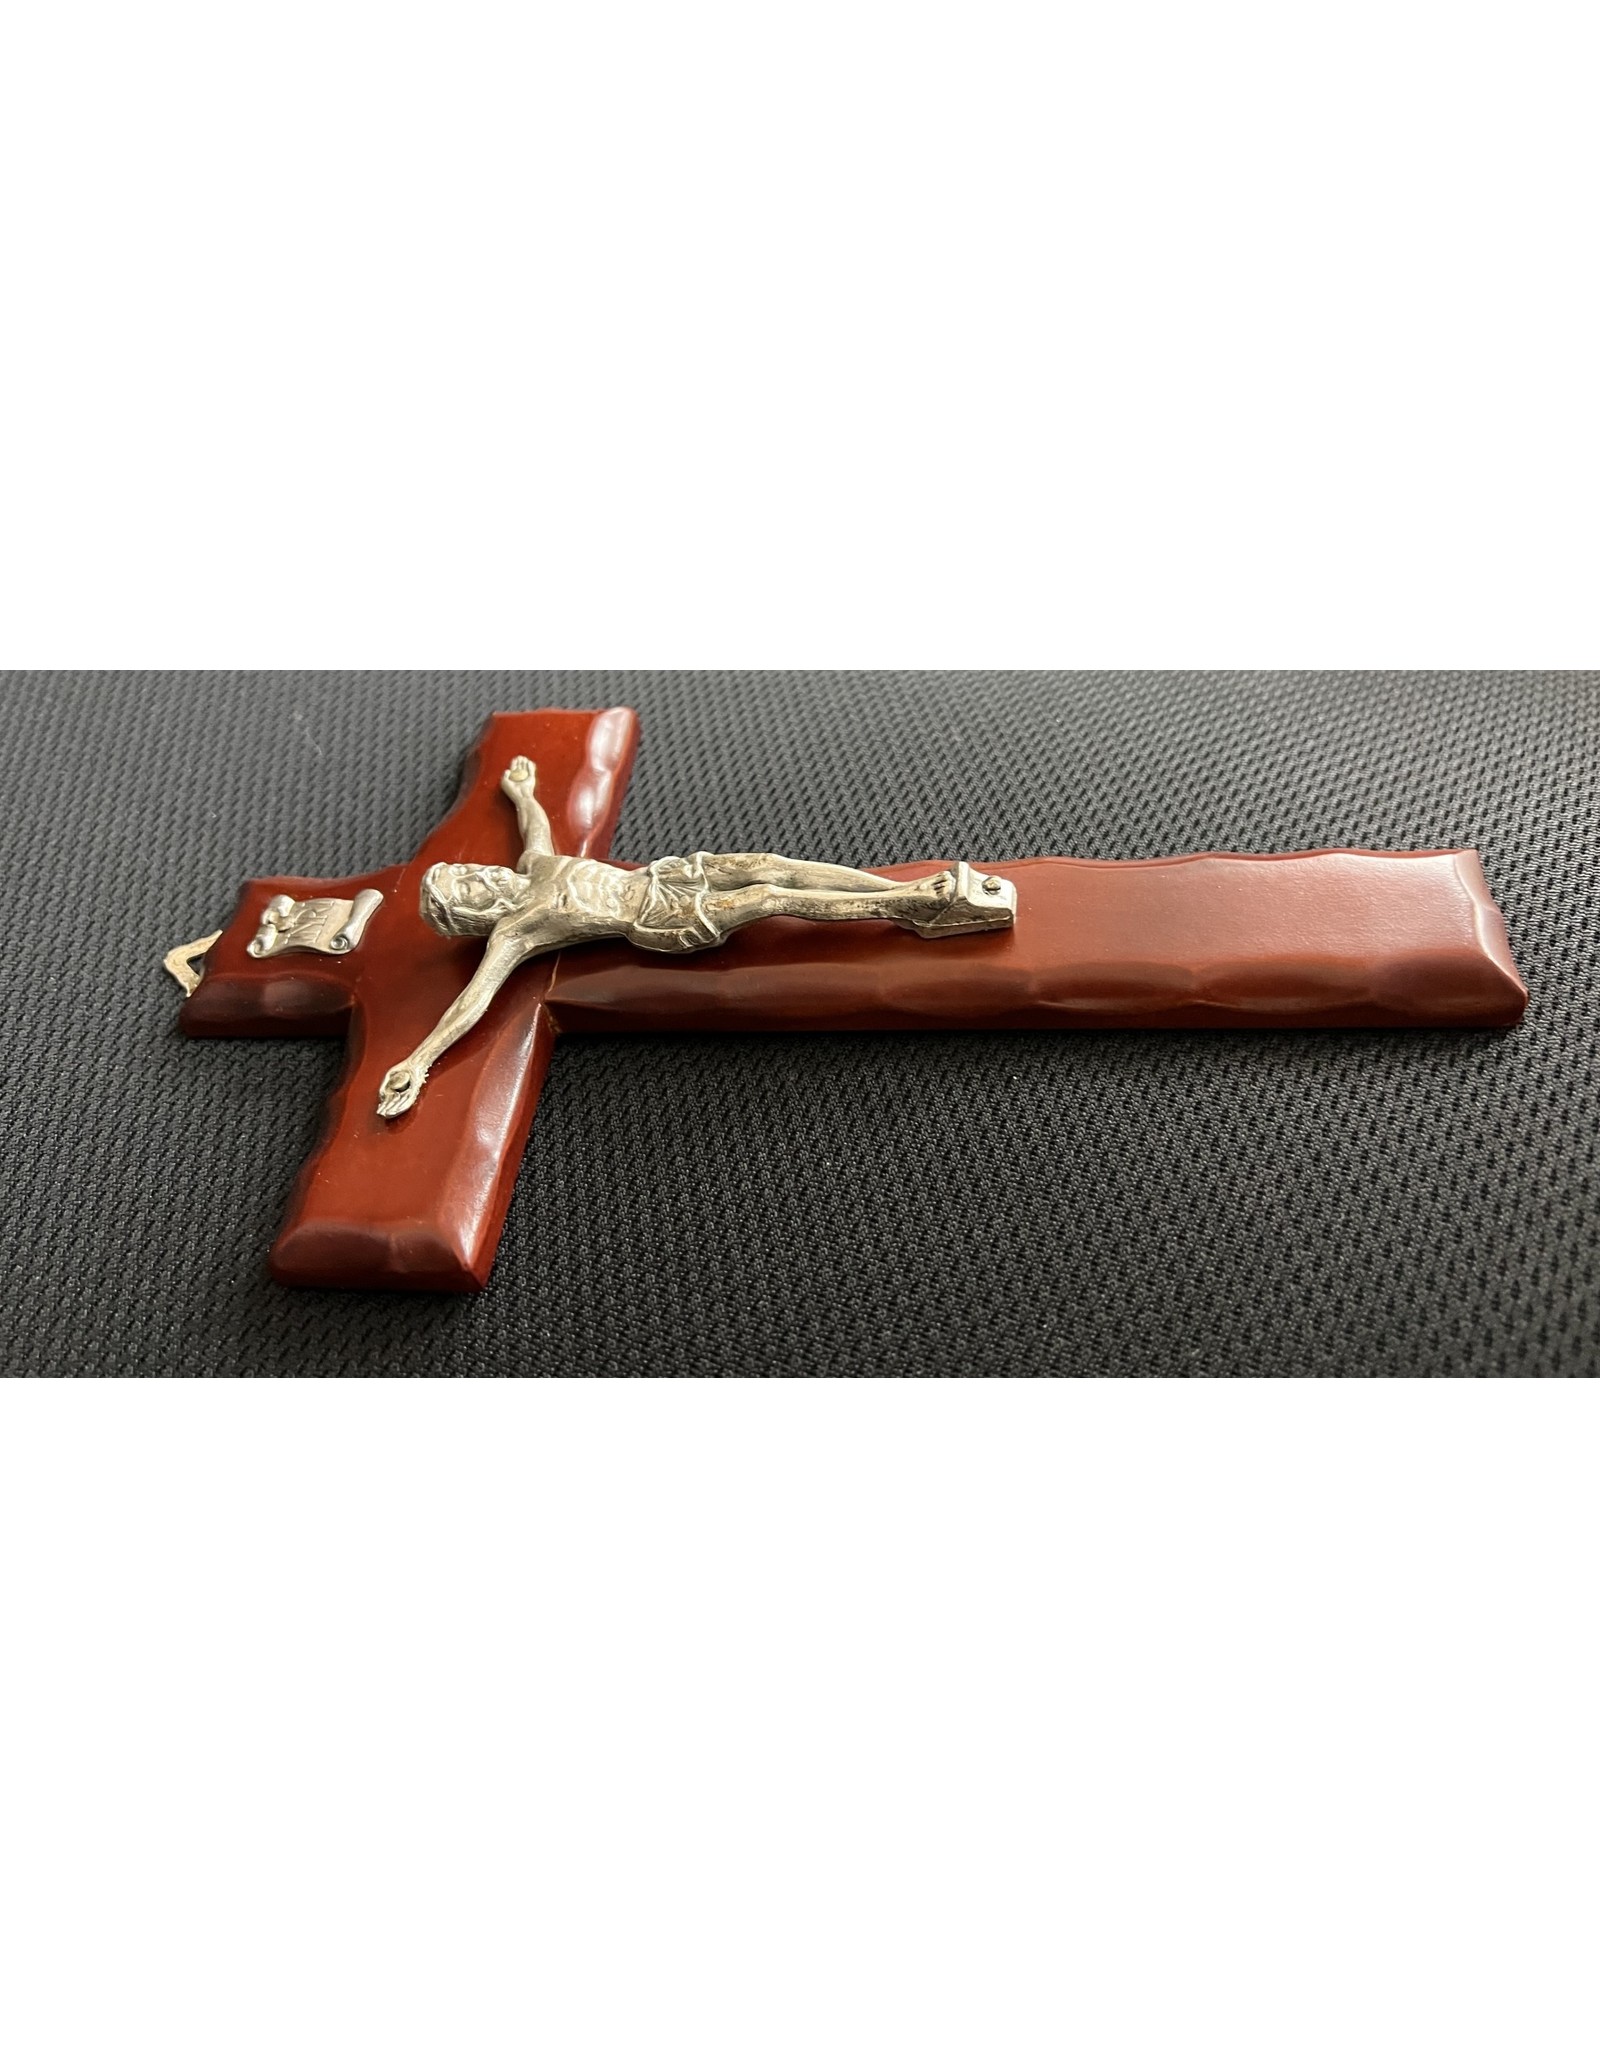 Lumen Mundi Crucifix - Clovered Red Wood (8")